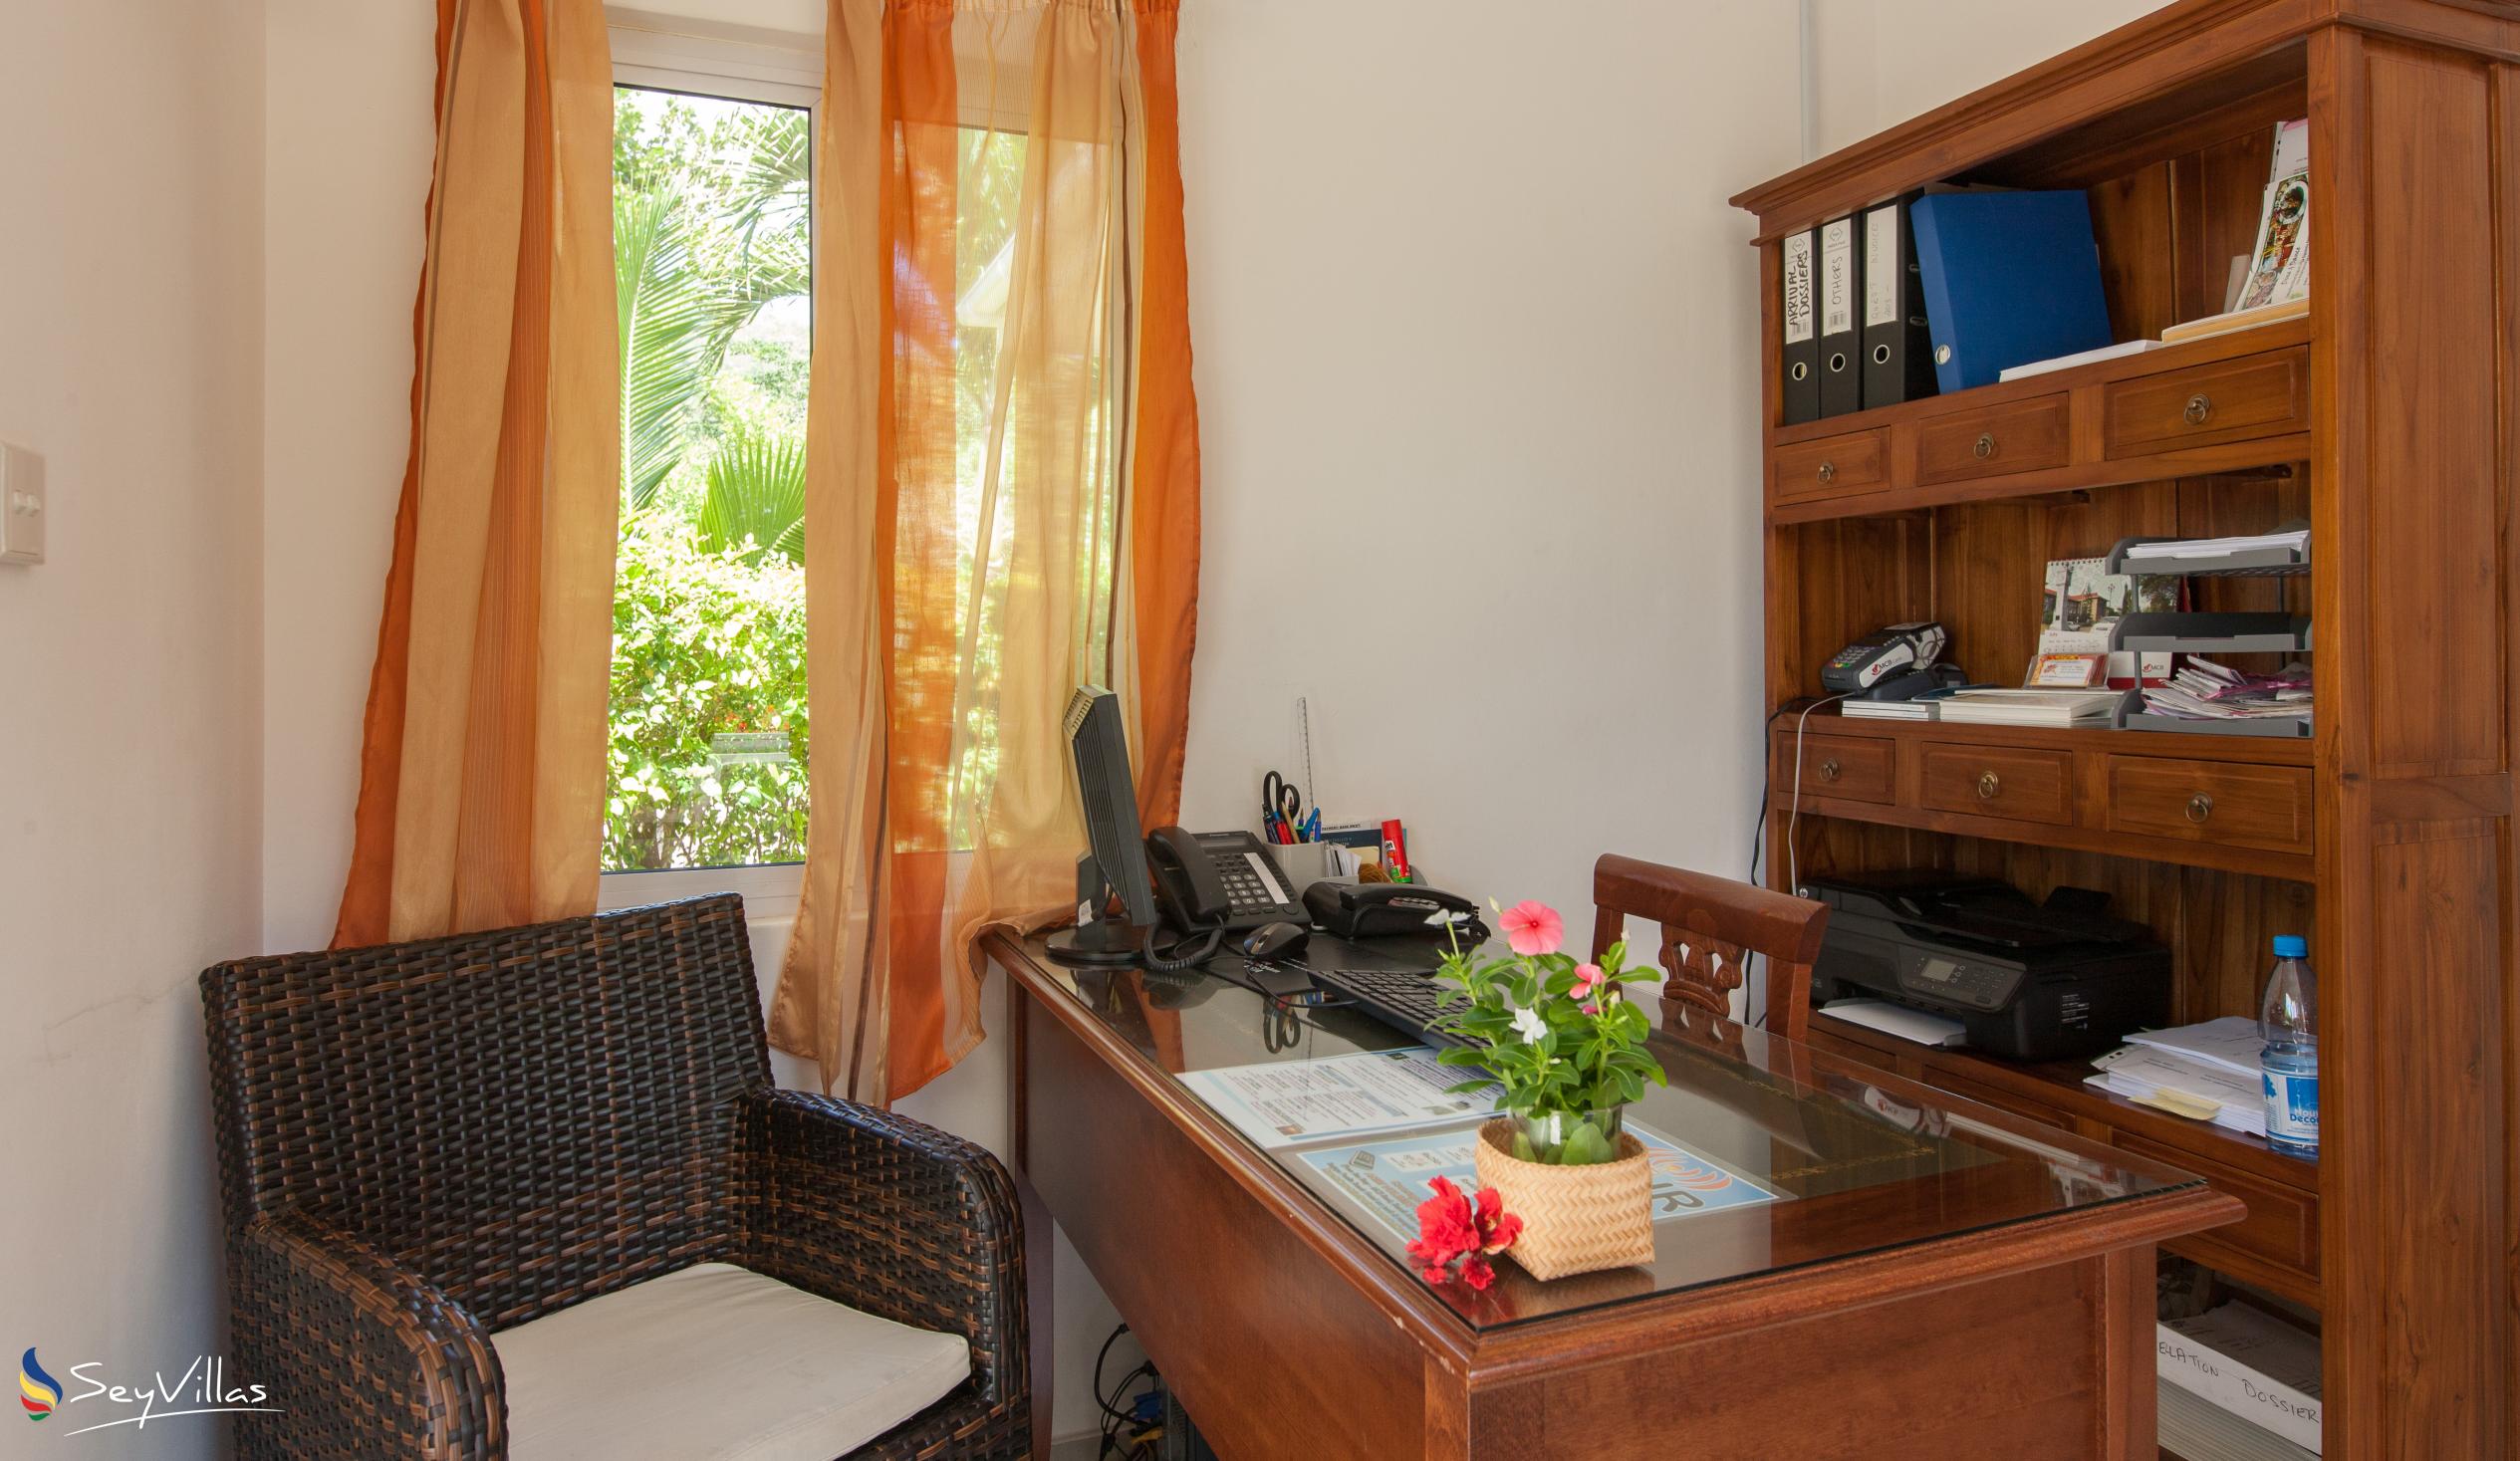 Photo 9: Cote d'Or Apartments - Indoor area - Praslin (Seychelles)